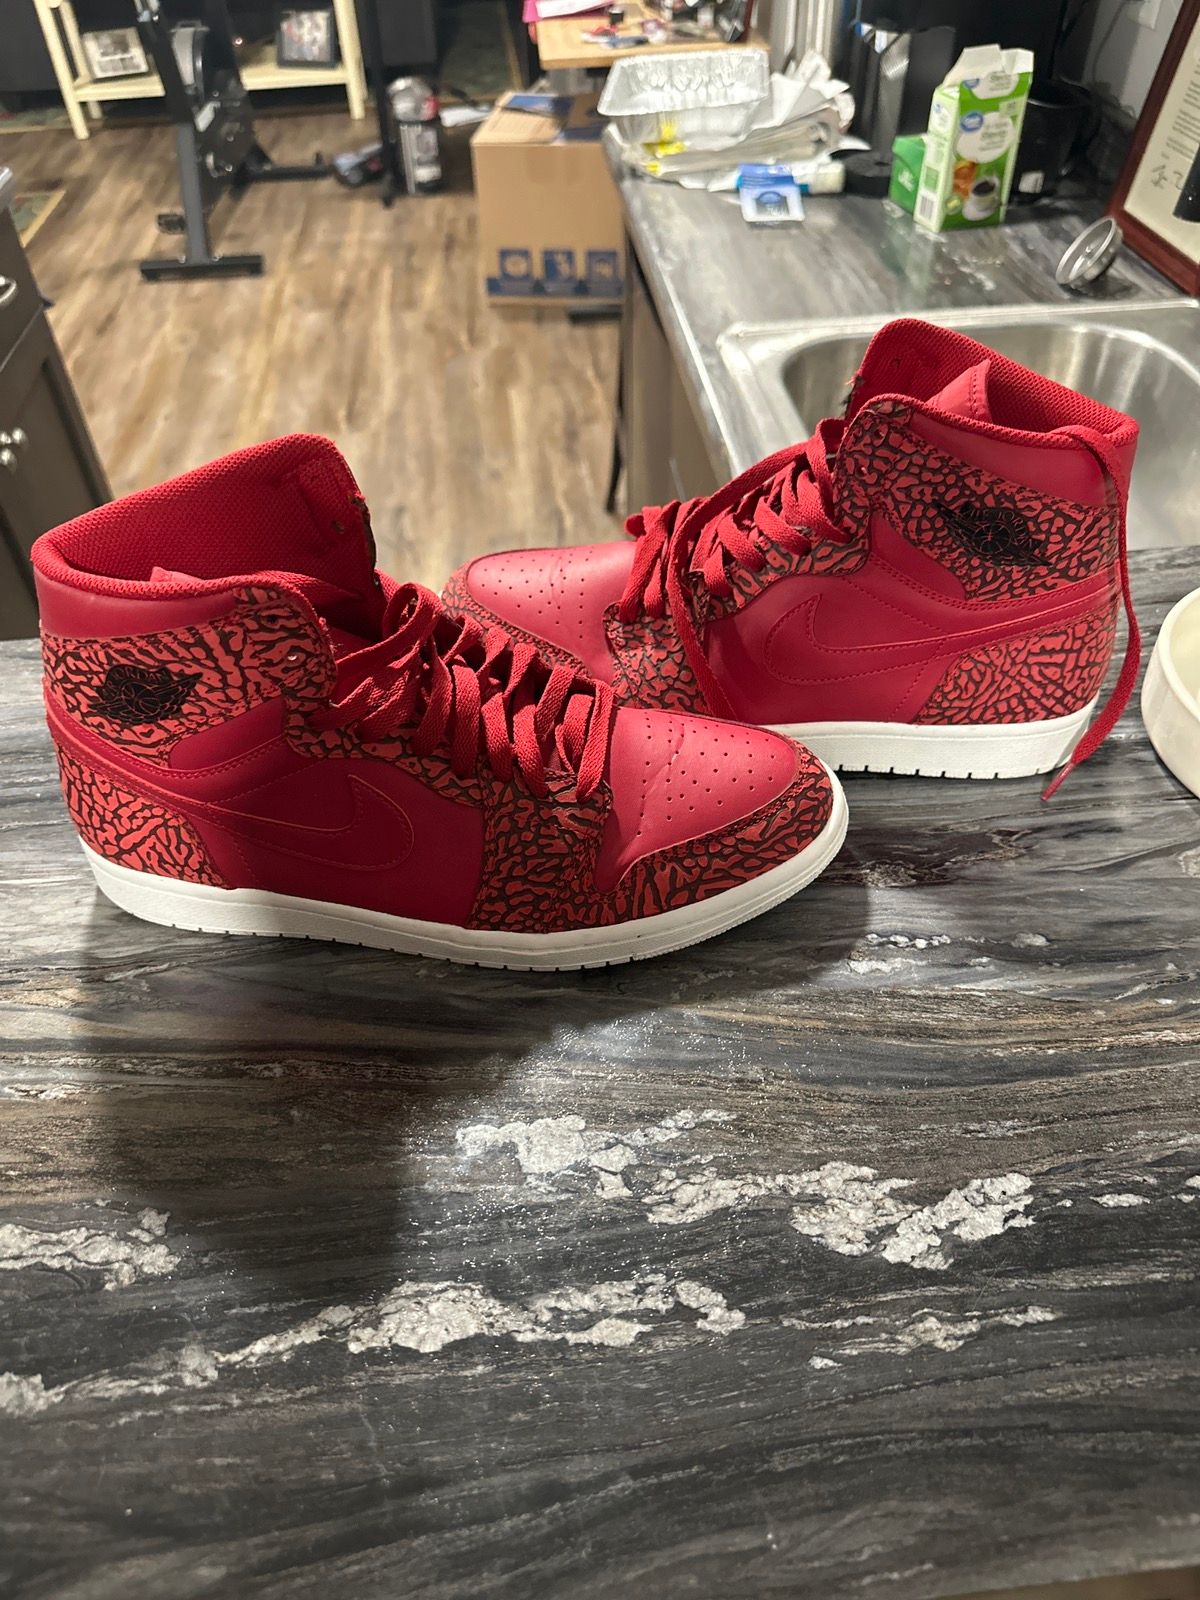 Nike Jordan 1 red elephant Size US 11 / EU 44 - 1 Preview